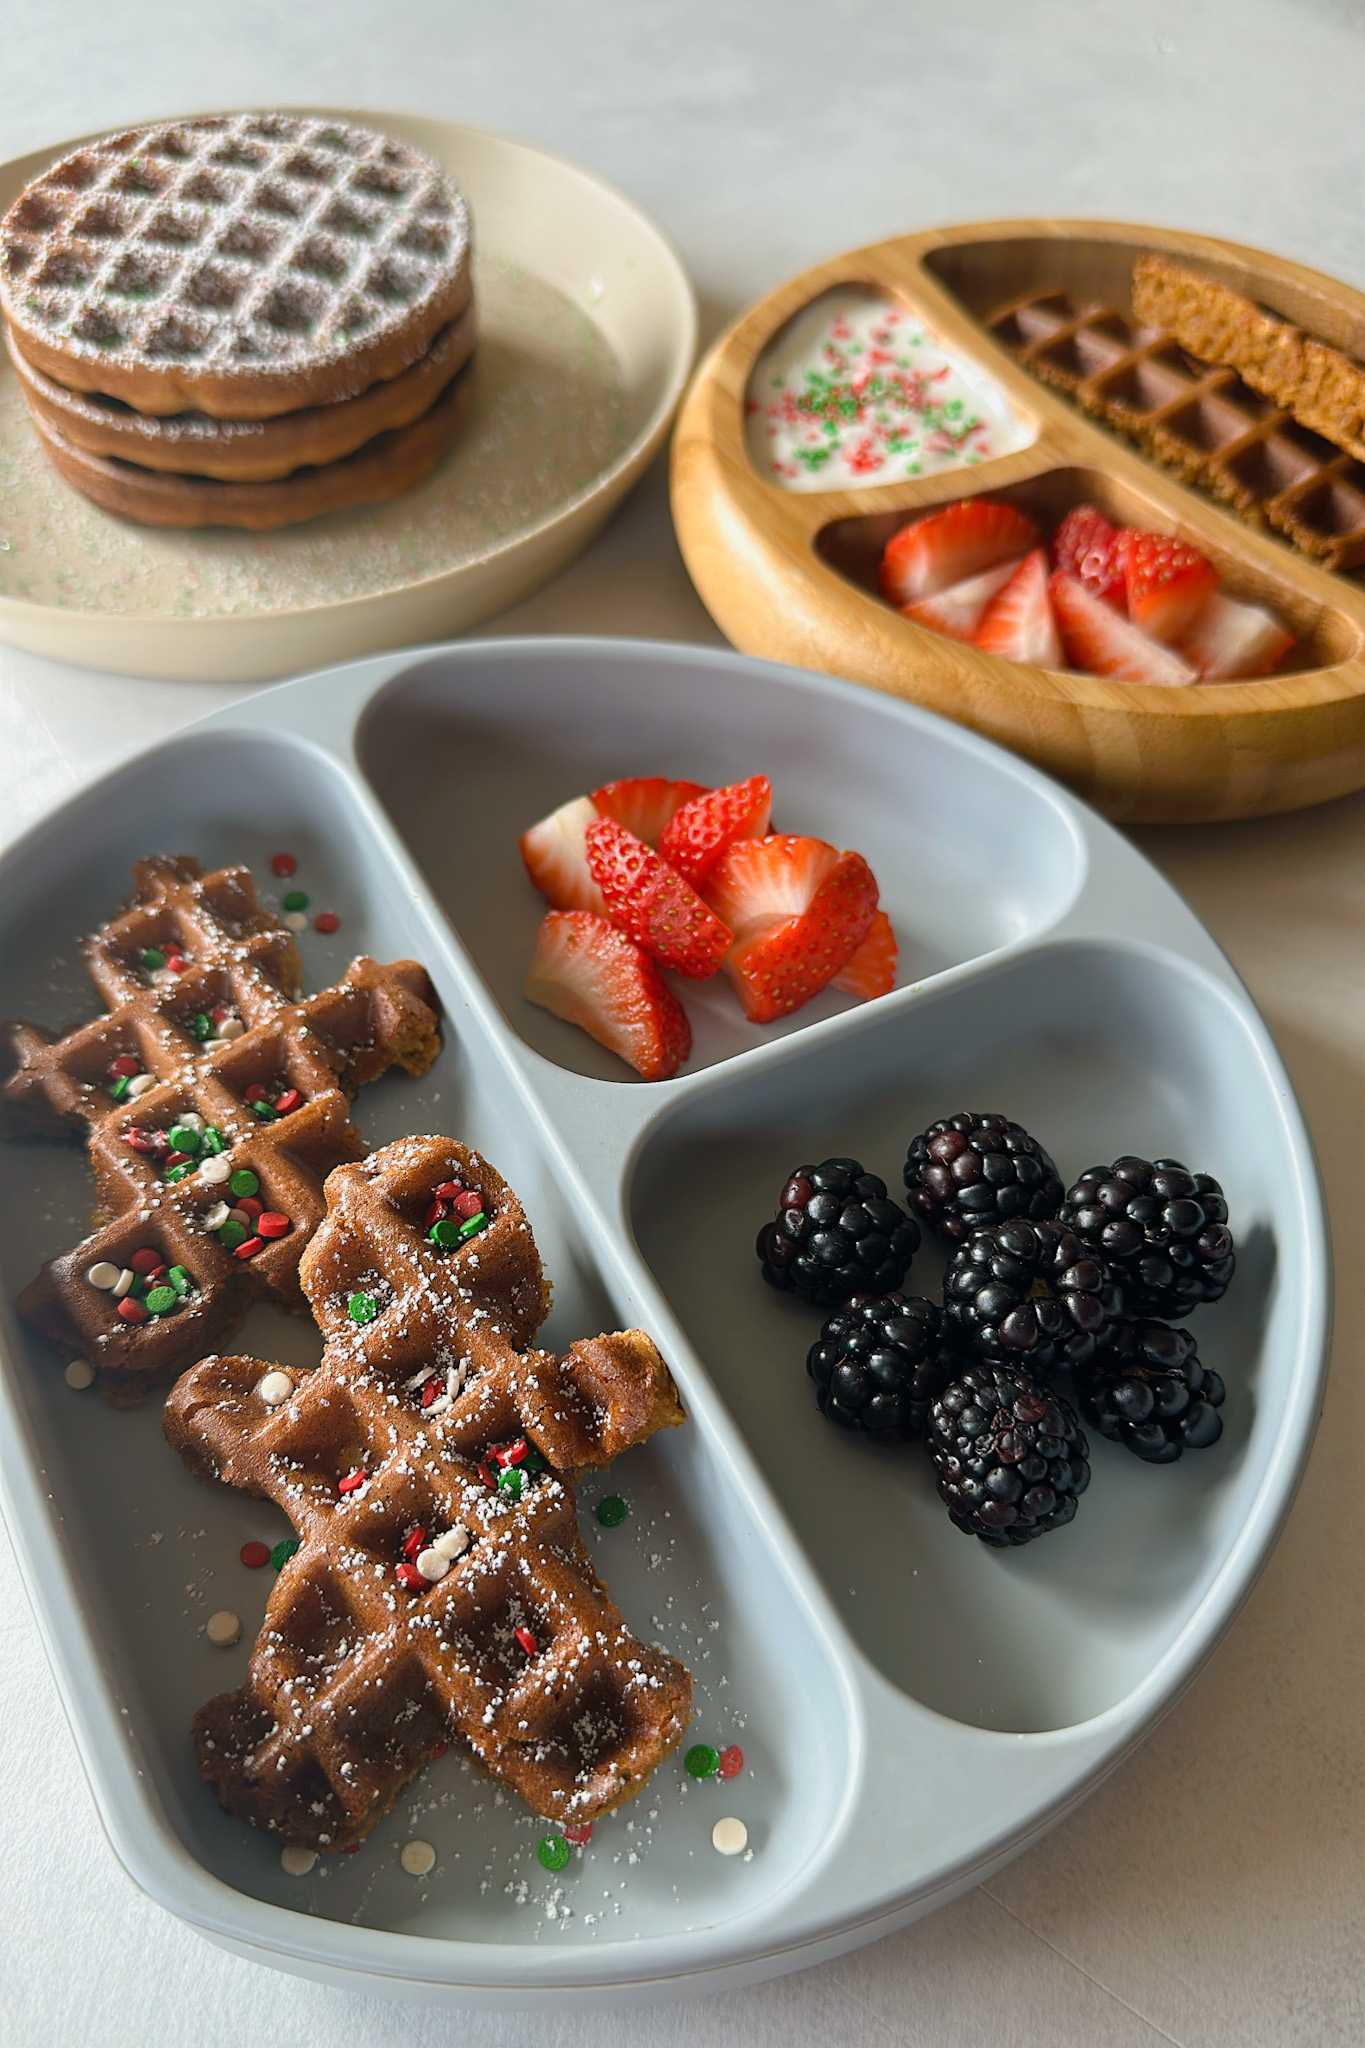 Gingerbread waffles served with yogurt, strawberries and blackberries.